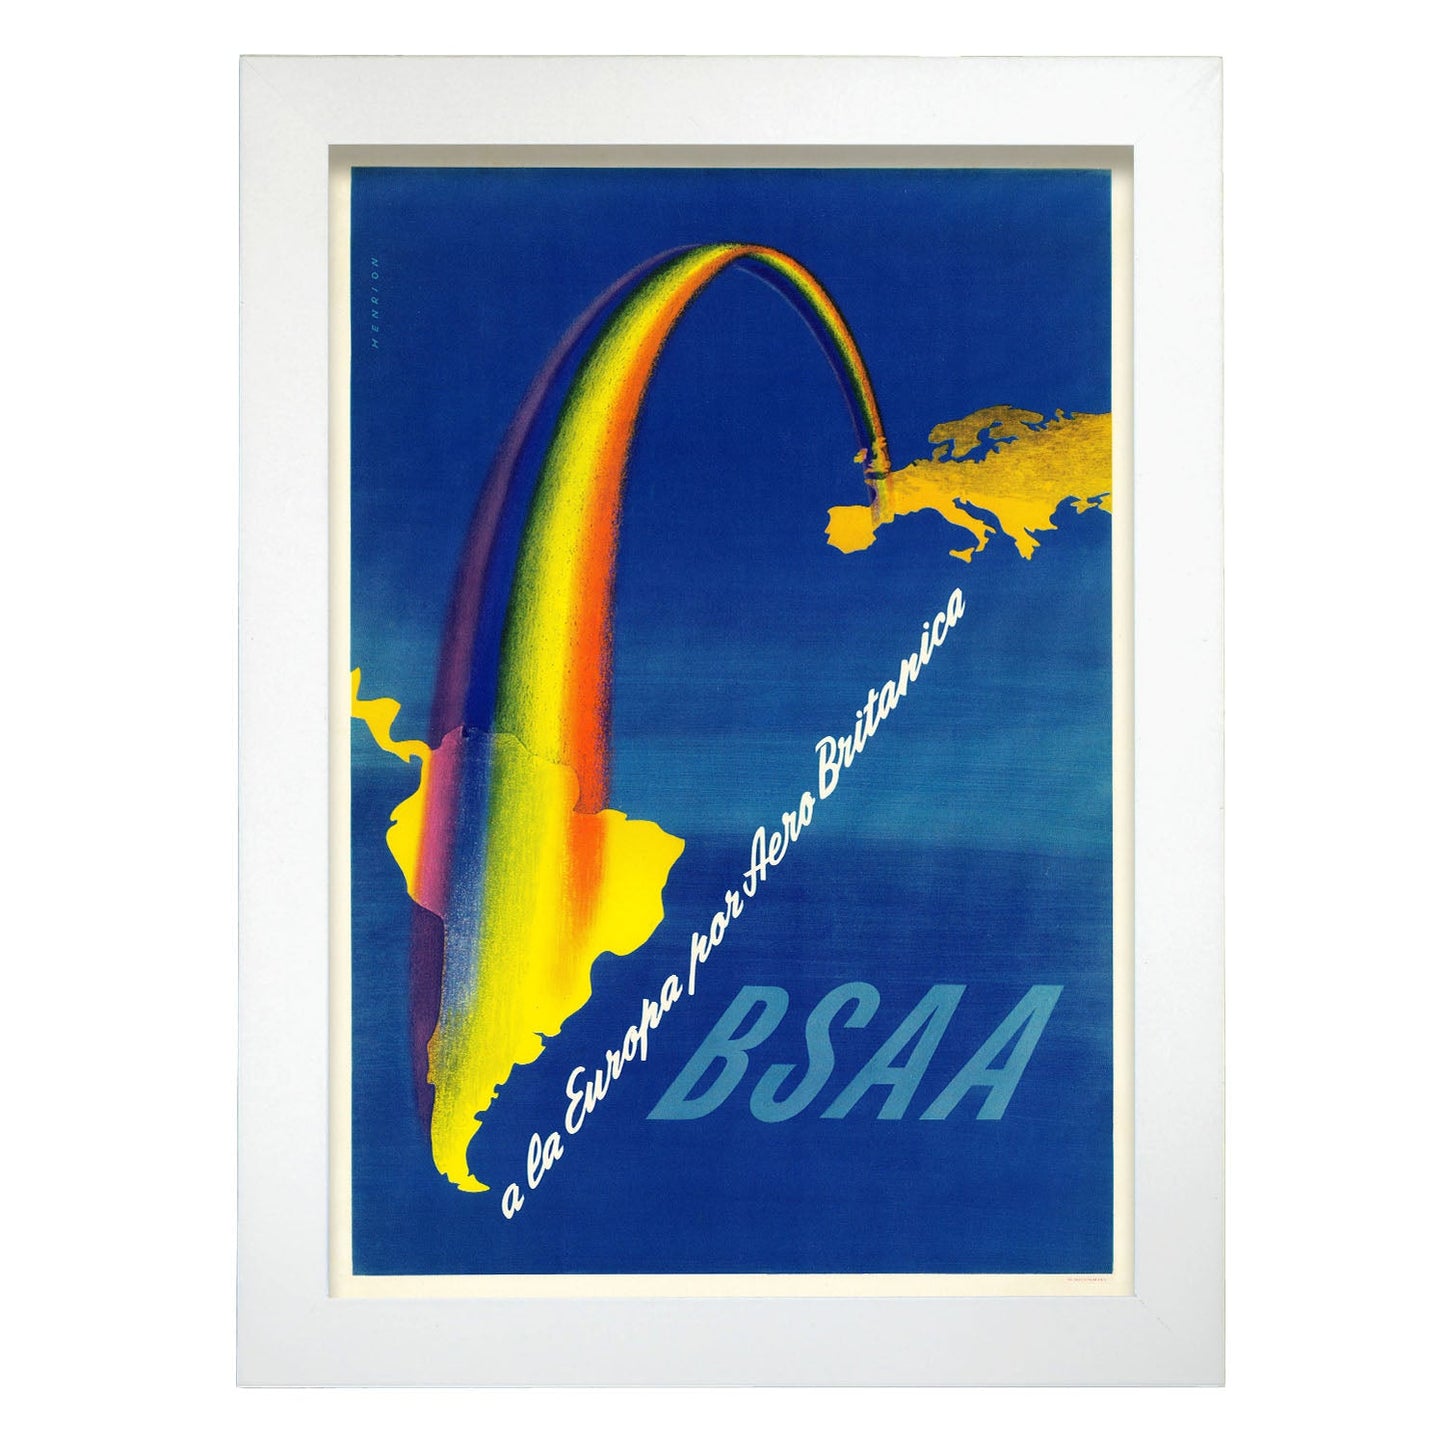 BSAA-Vintage-airline-poster-Artwork-Nacnic-A4-Marco Blanco-Nacnic Estudio SL